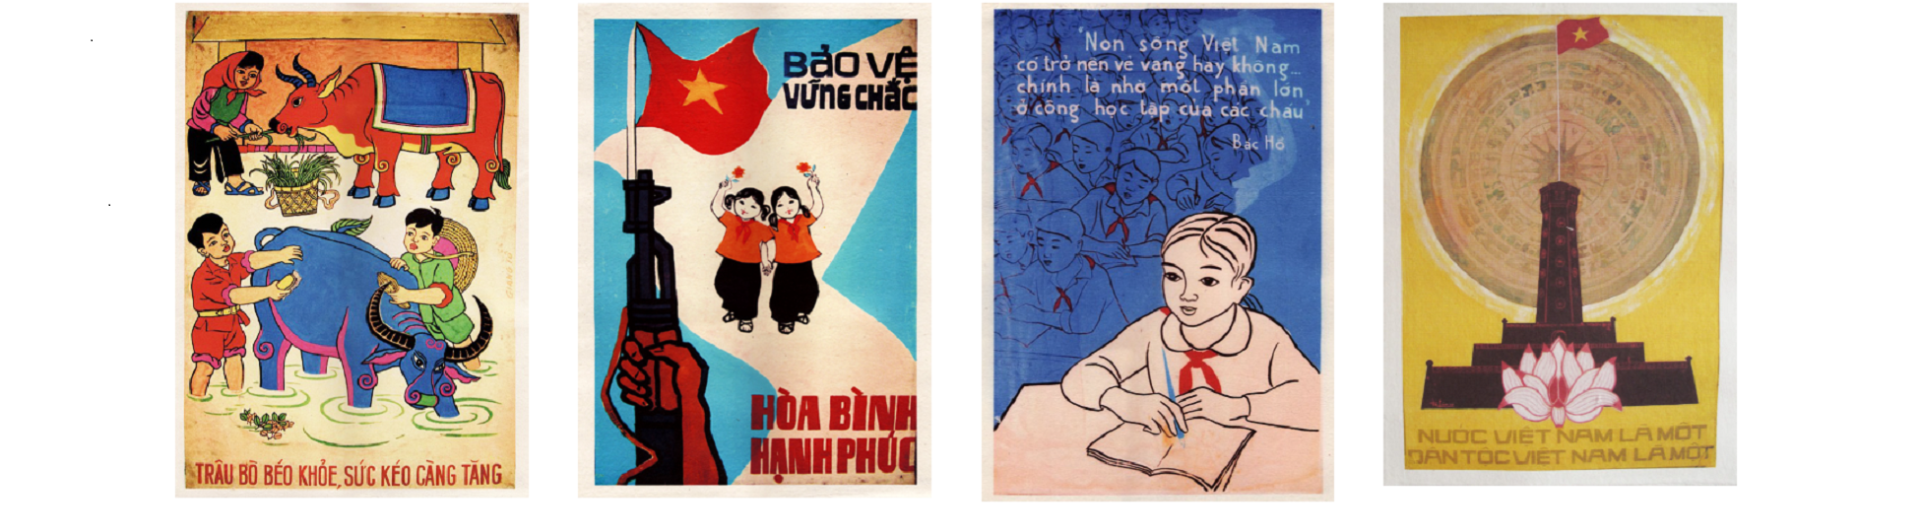 Various Vintage Vietnam Propaganda posters